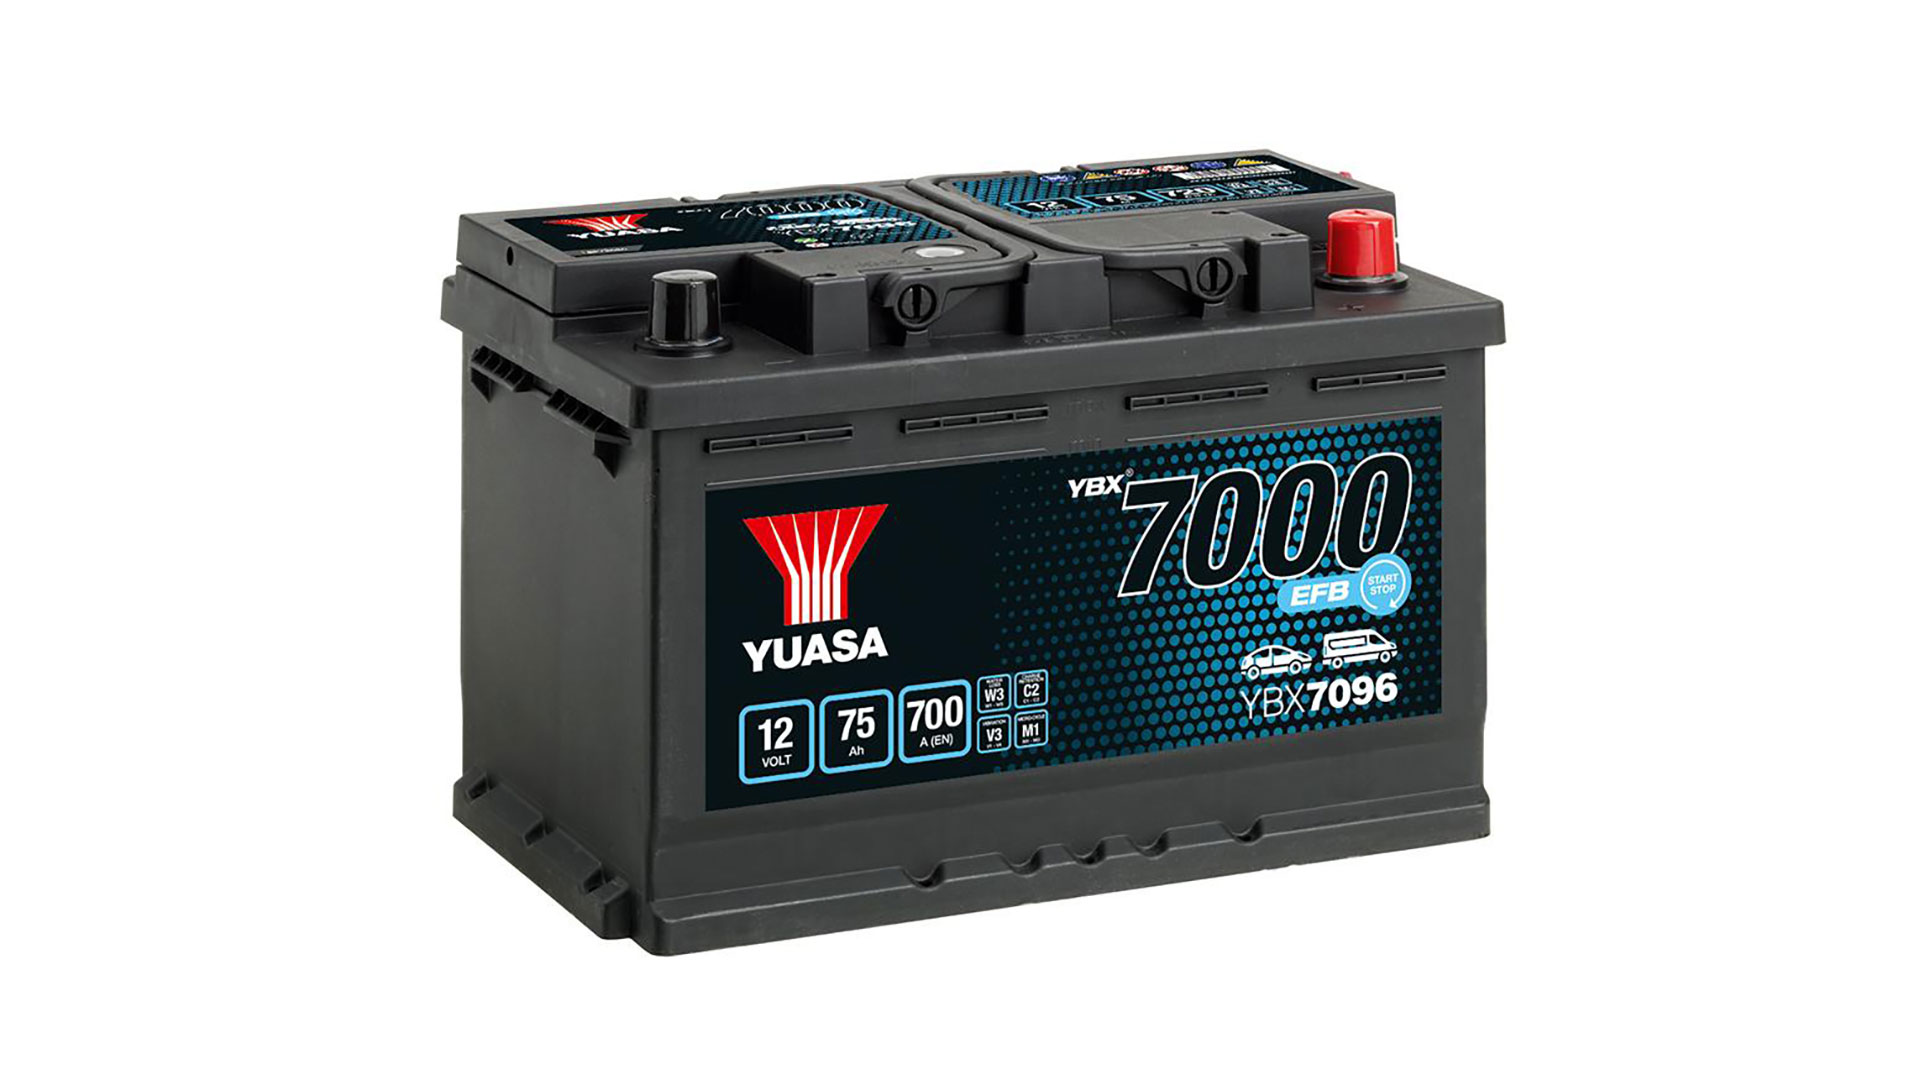 BATTERIE YUASA YBX7096 START STOP EFB 12V 75AH 700A - Batteries Auto,  Voitures, 4x4, Véhicules Start & Stop Auto - BatterySet